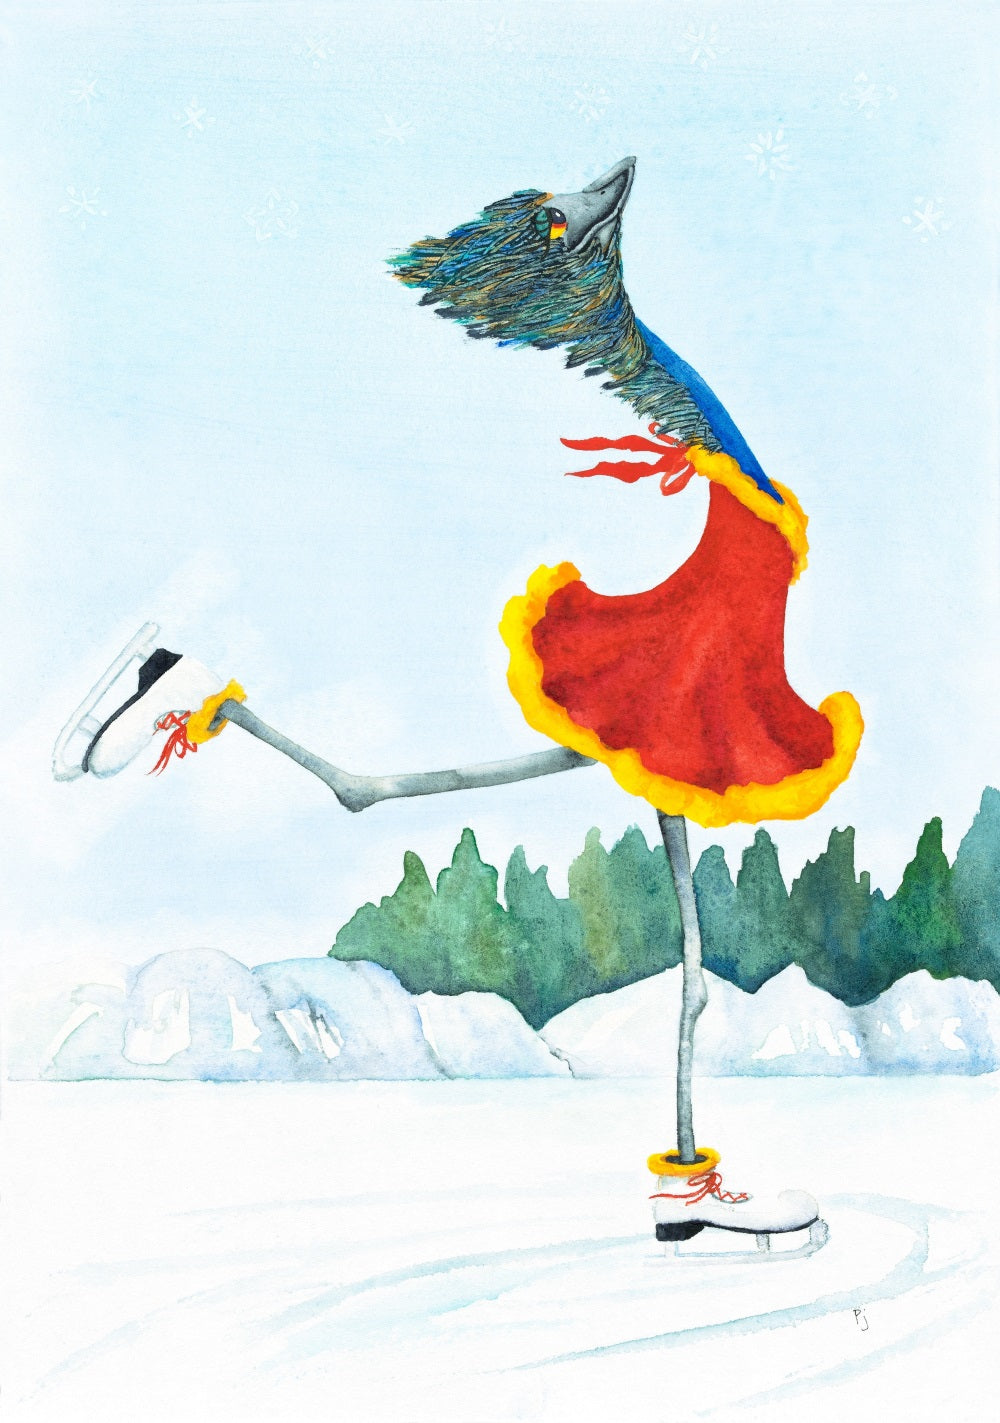 Emu Icecapades - Print of an Emu Watercolour